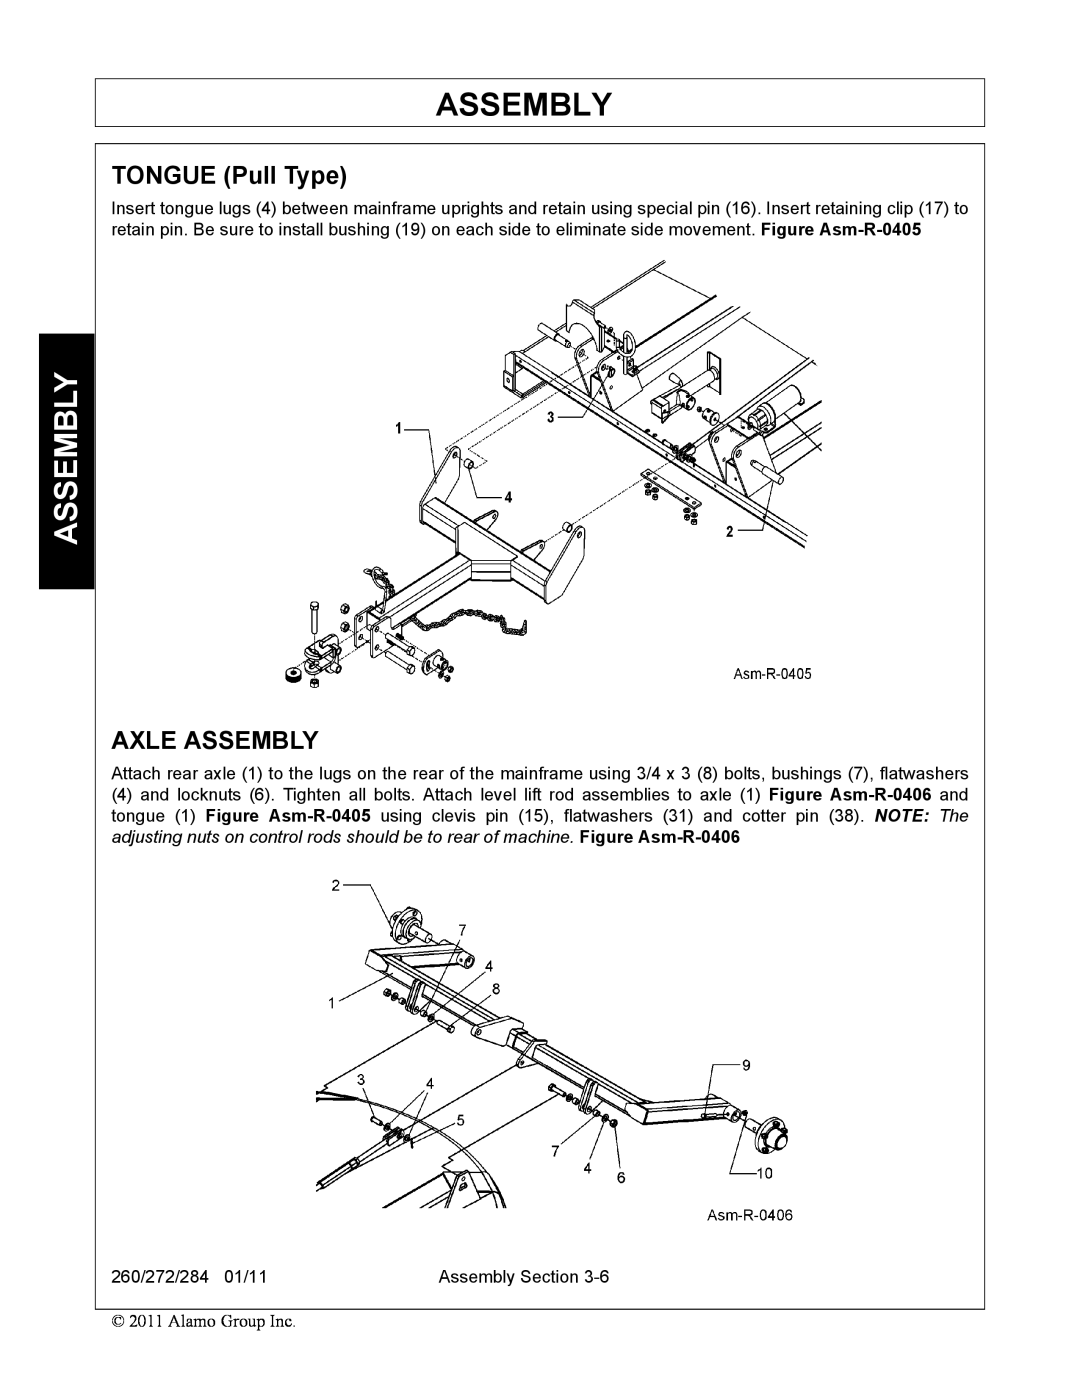 Alamo 260, 284, 272 manual TONGUE Pull Type, Axle Assembly 